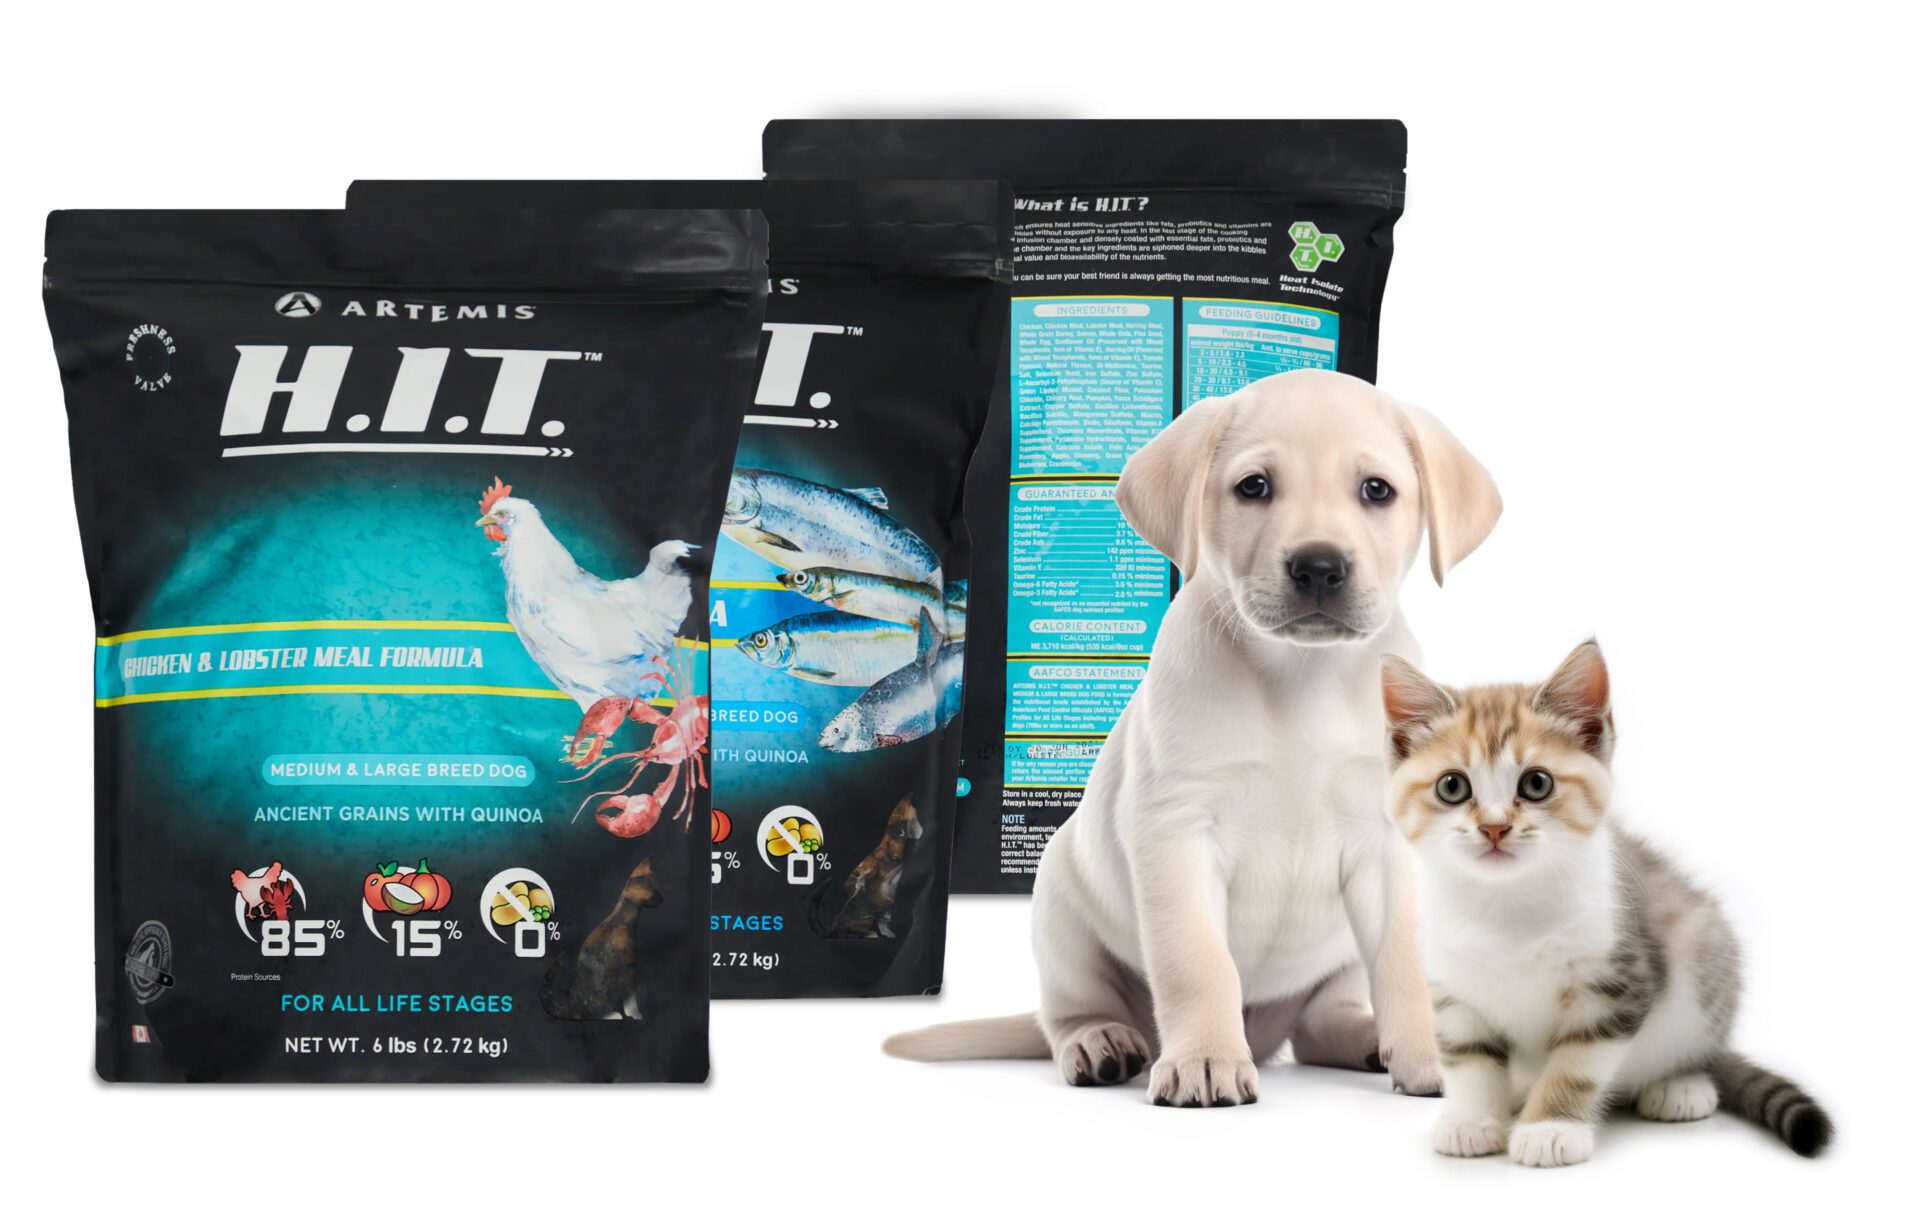 Pixellent packaging design for Artemis high quality pet foods